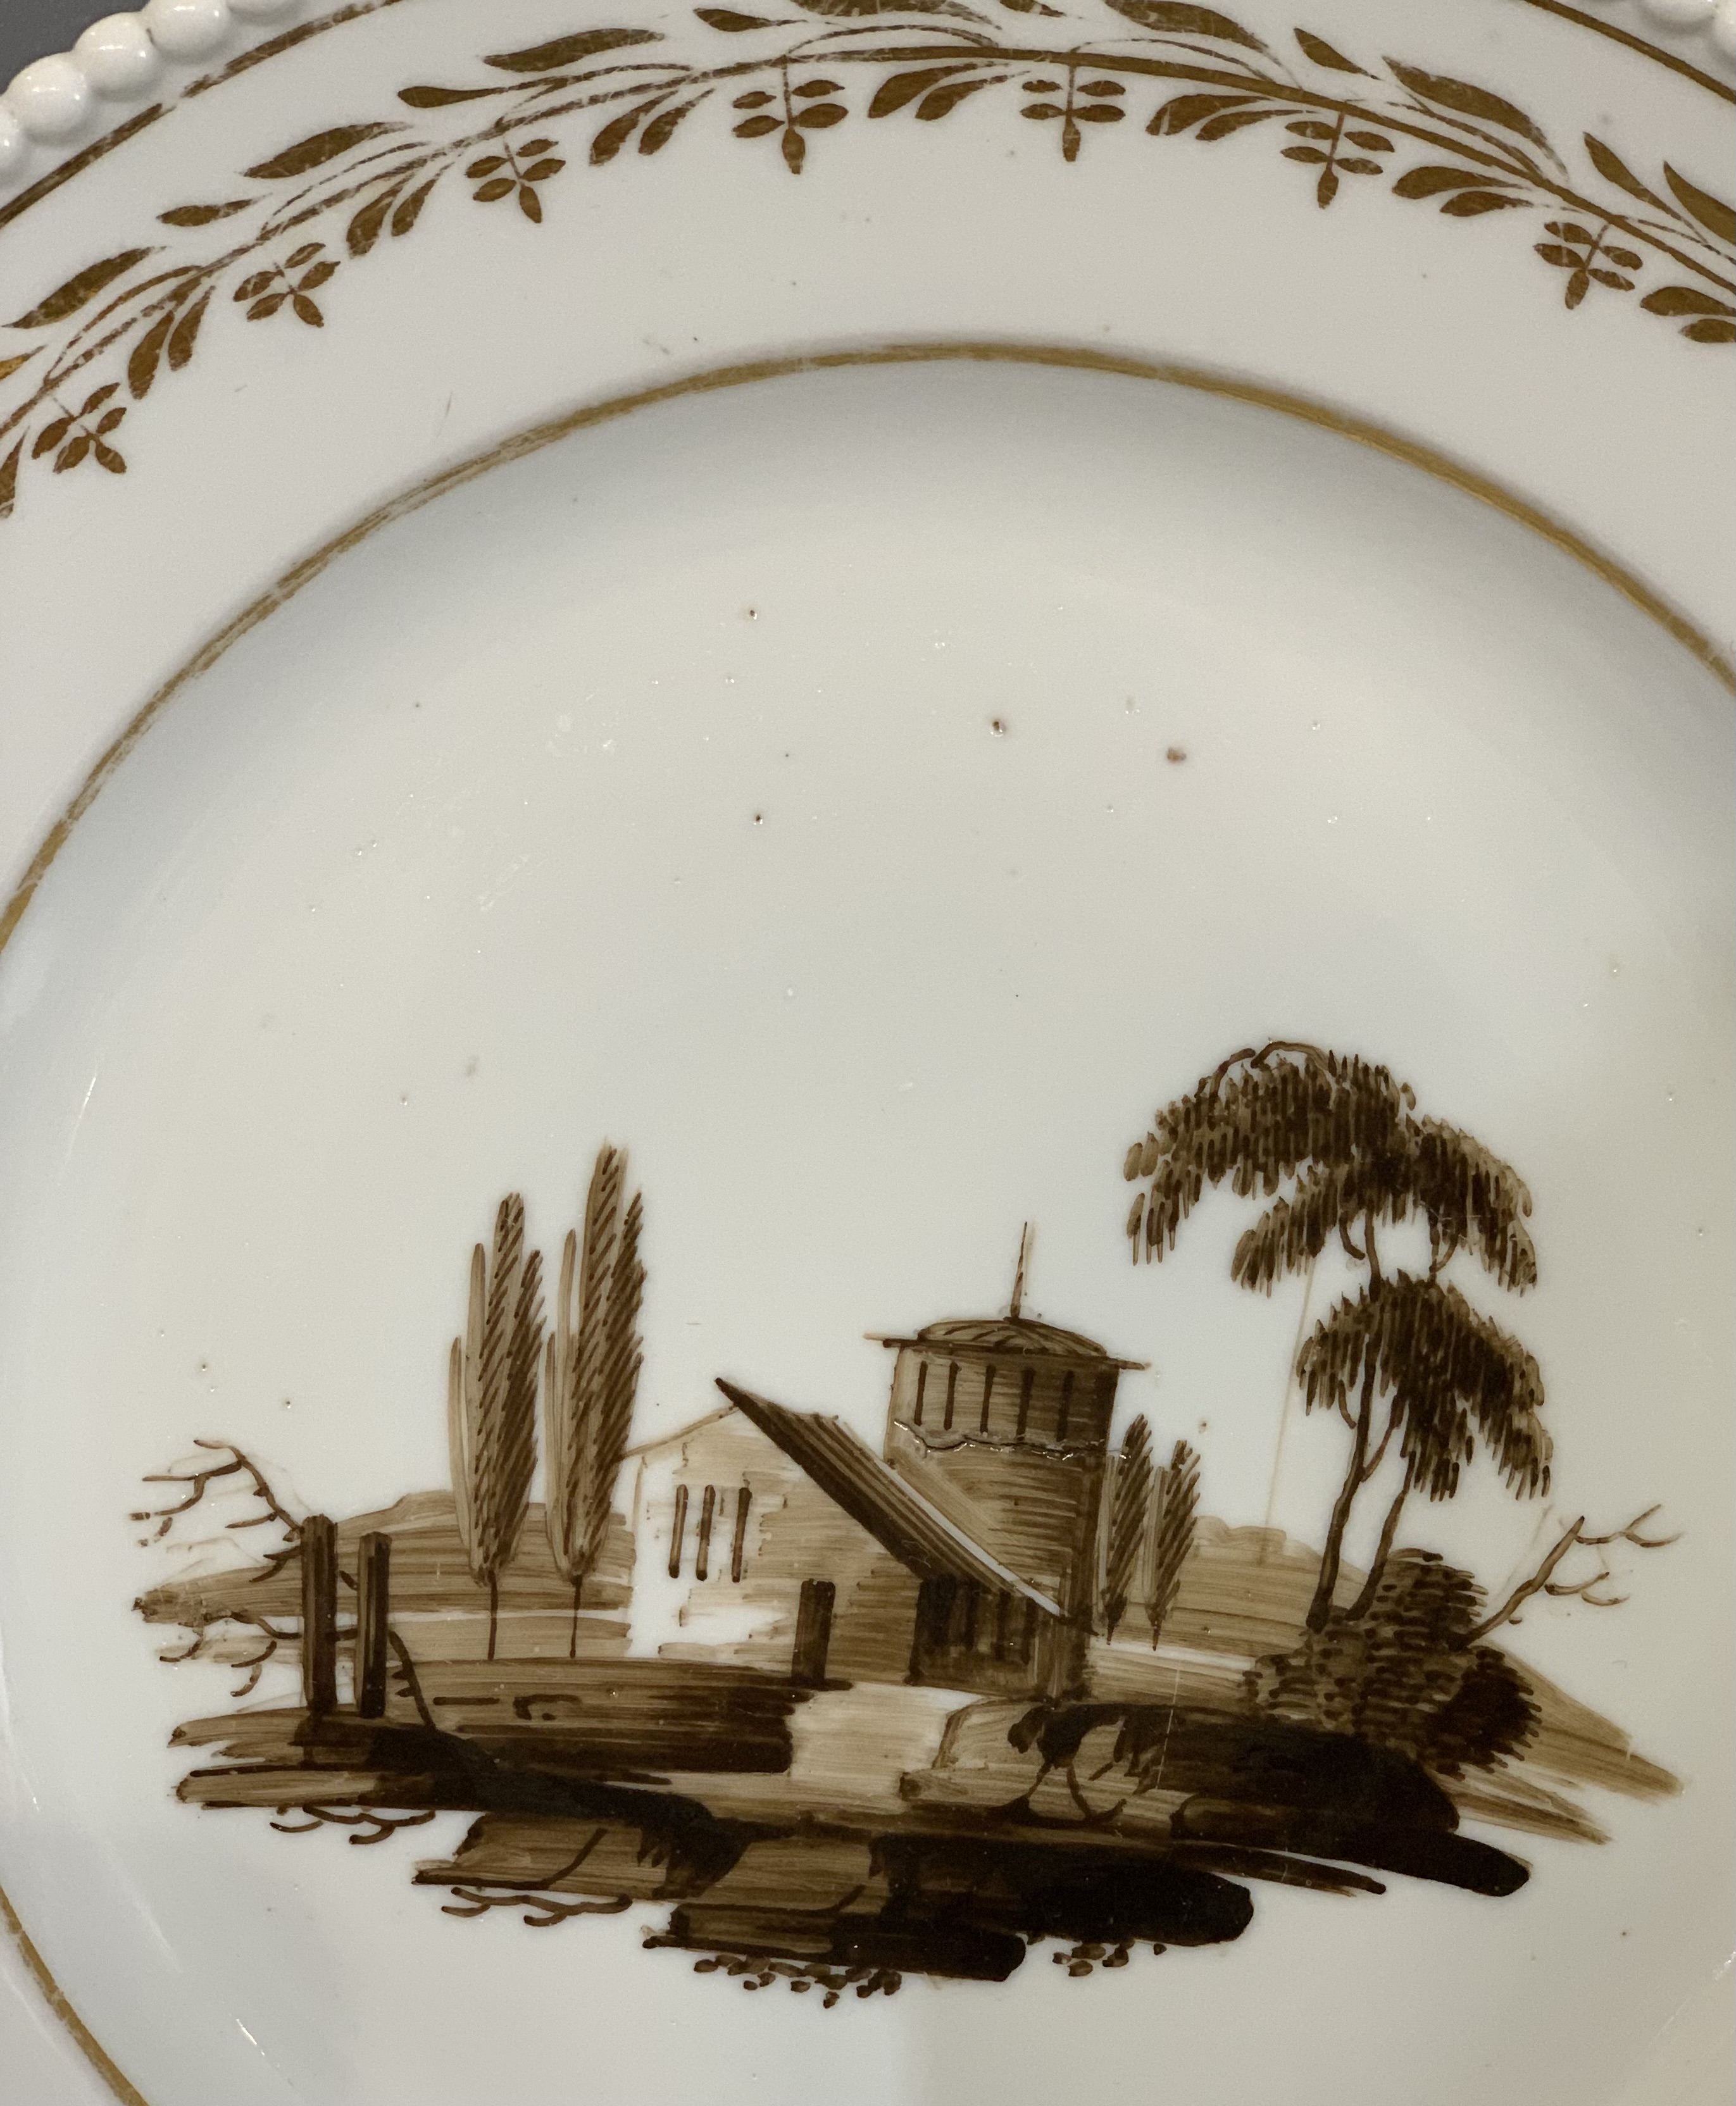 Тарелка с романтическим пейзажем, Россия, завод "А.Г. Попова", 1820-е гг.